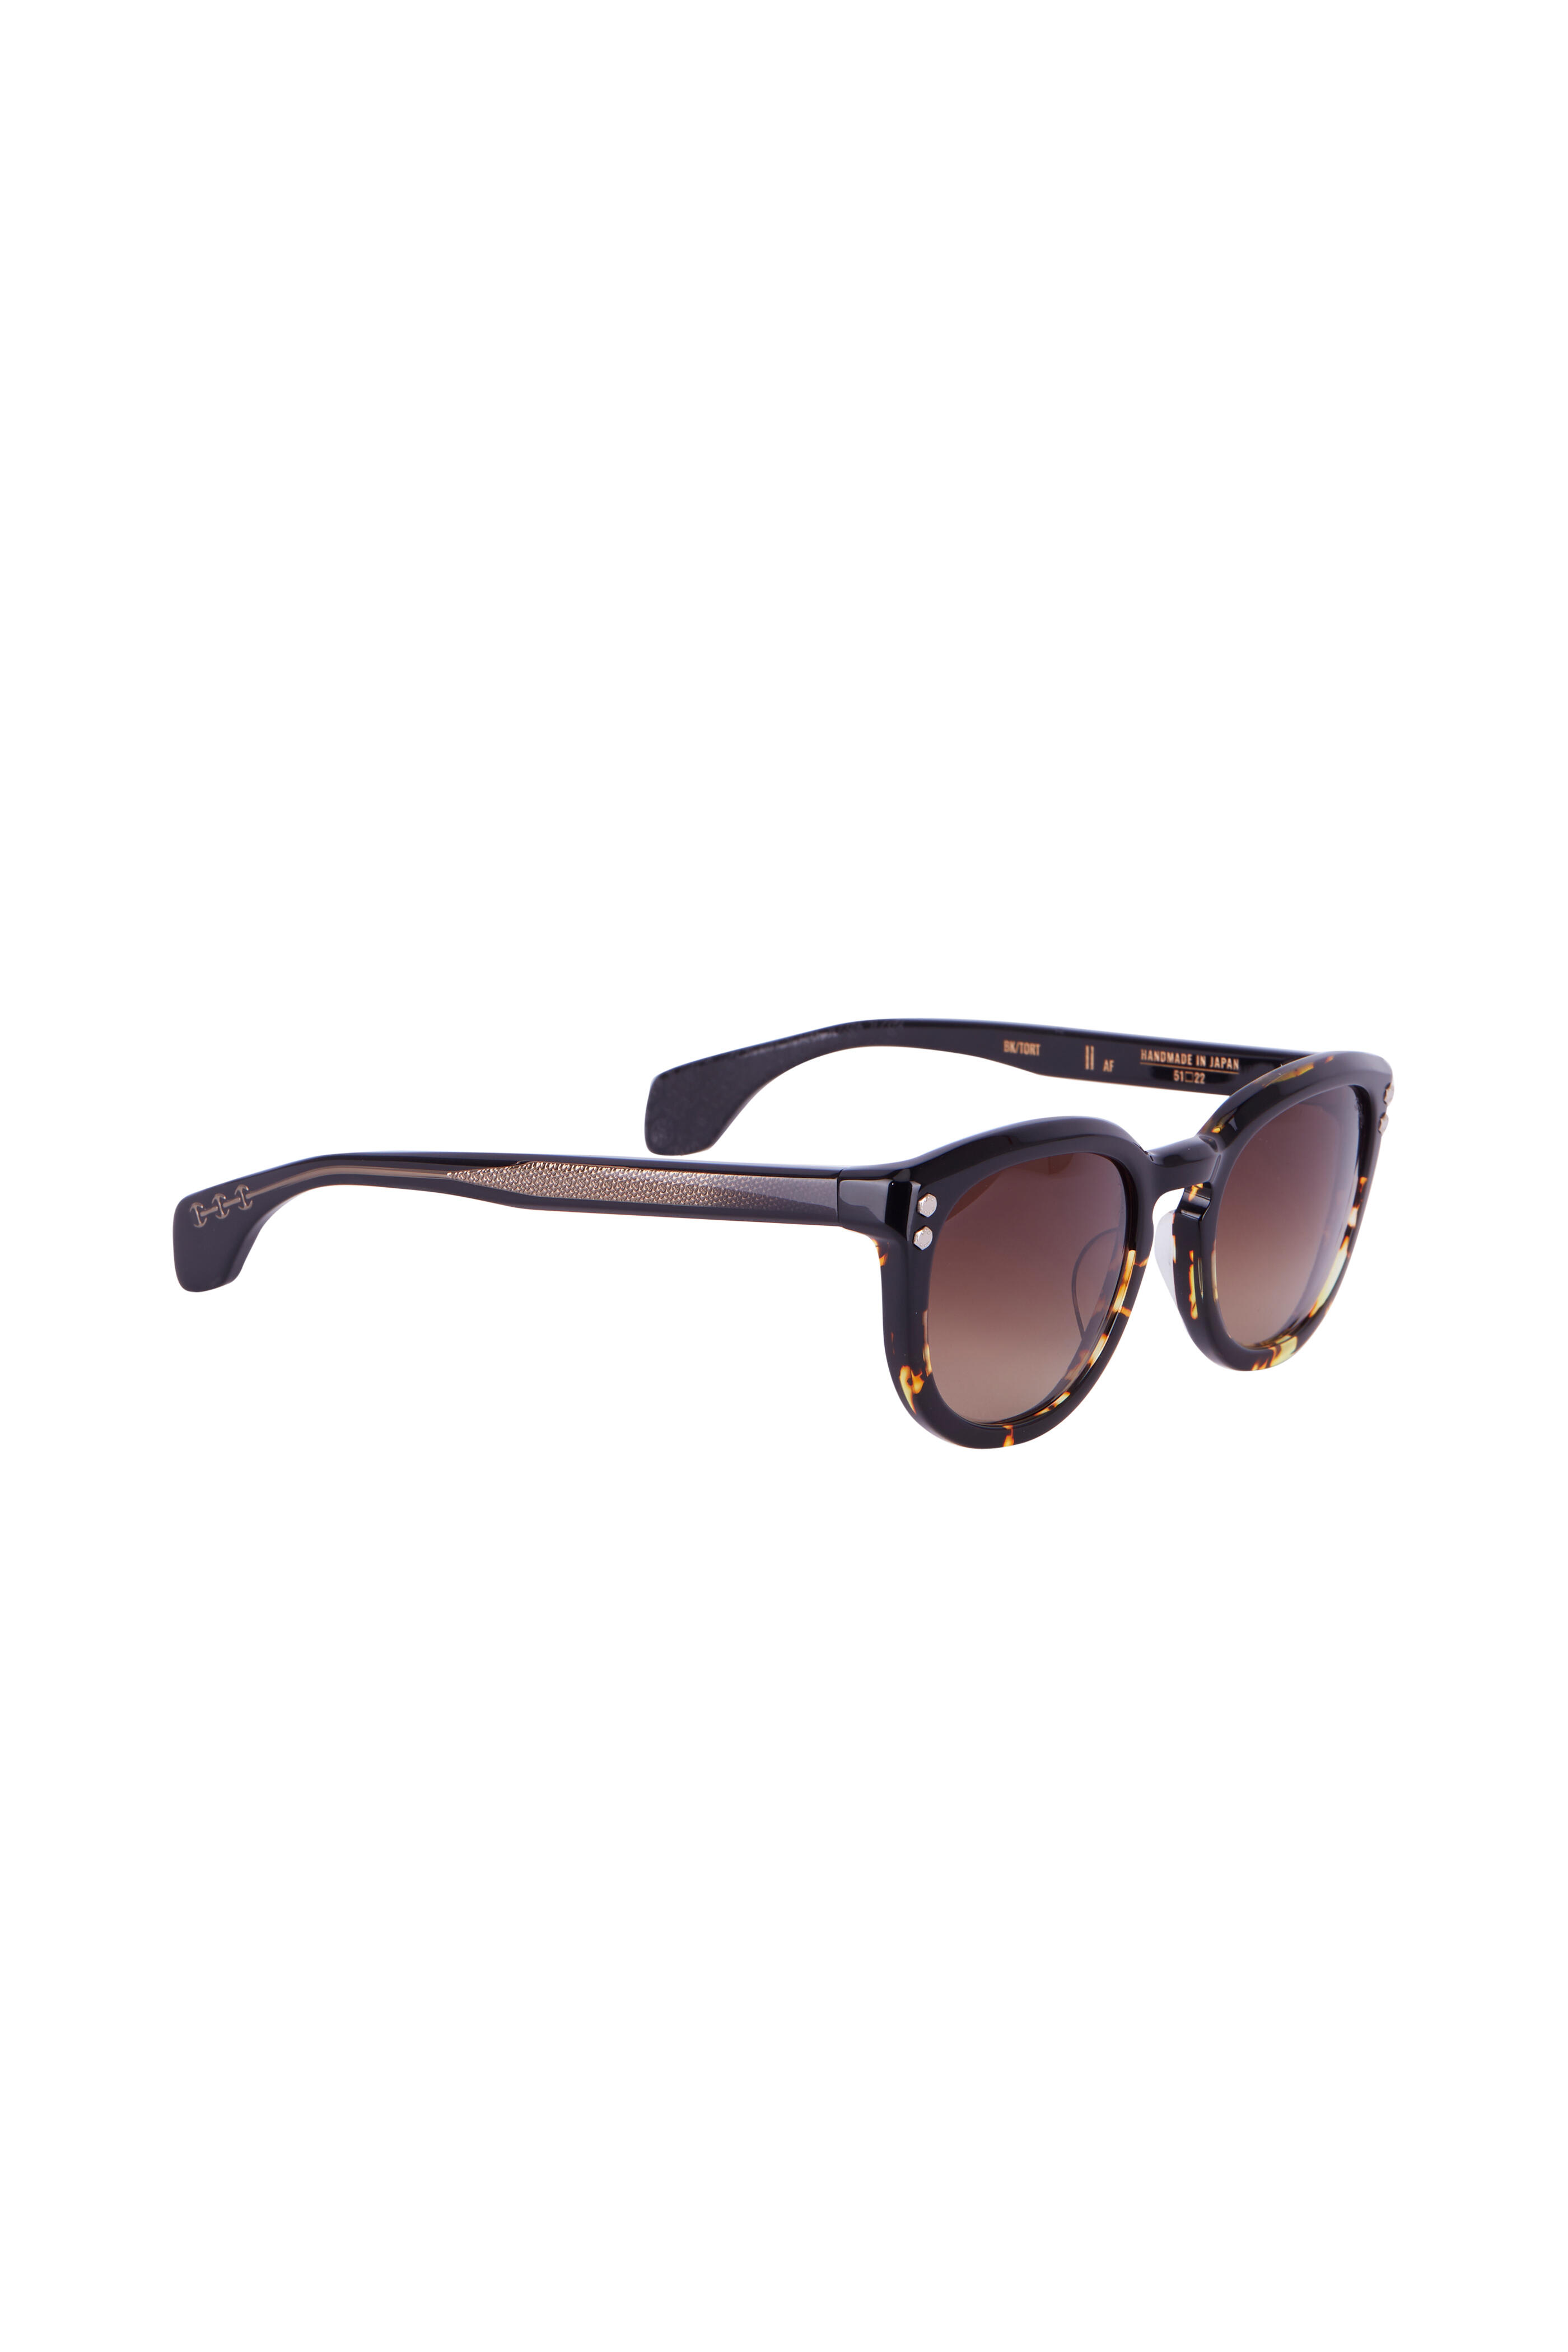 Hoorsenbuhs Sunglasses - Model X (Black)